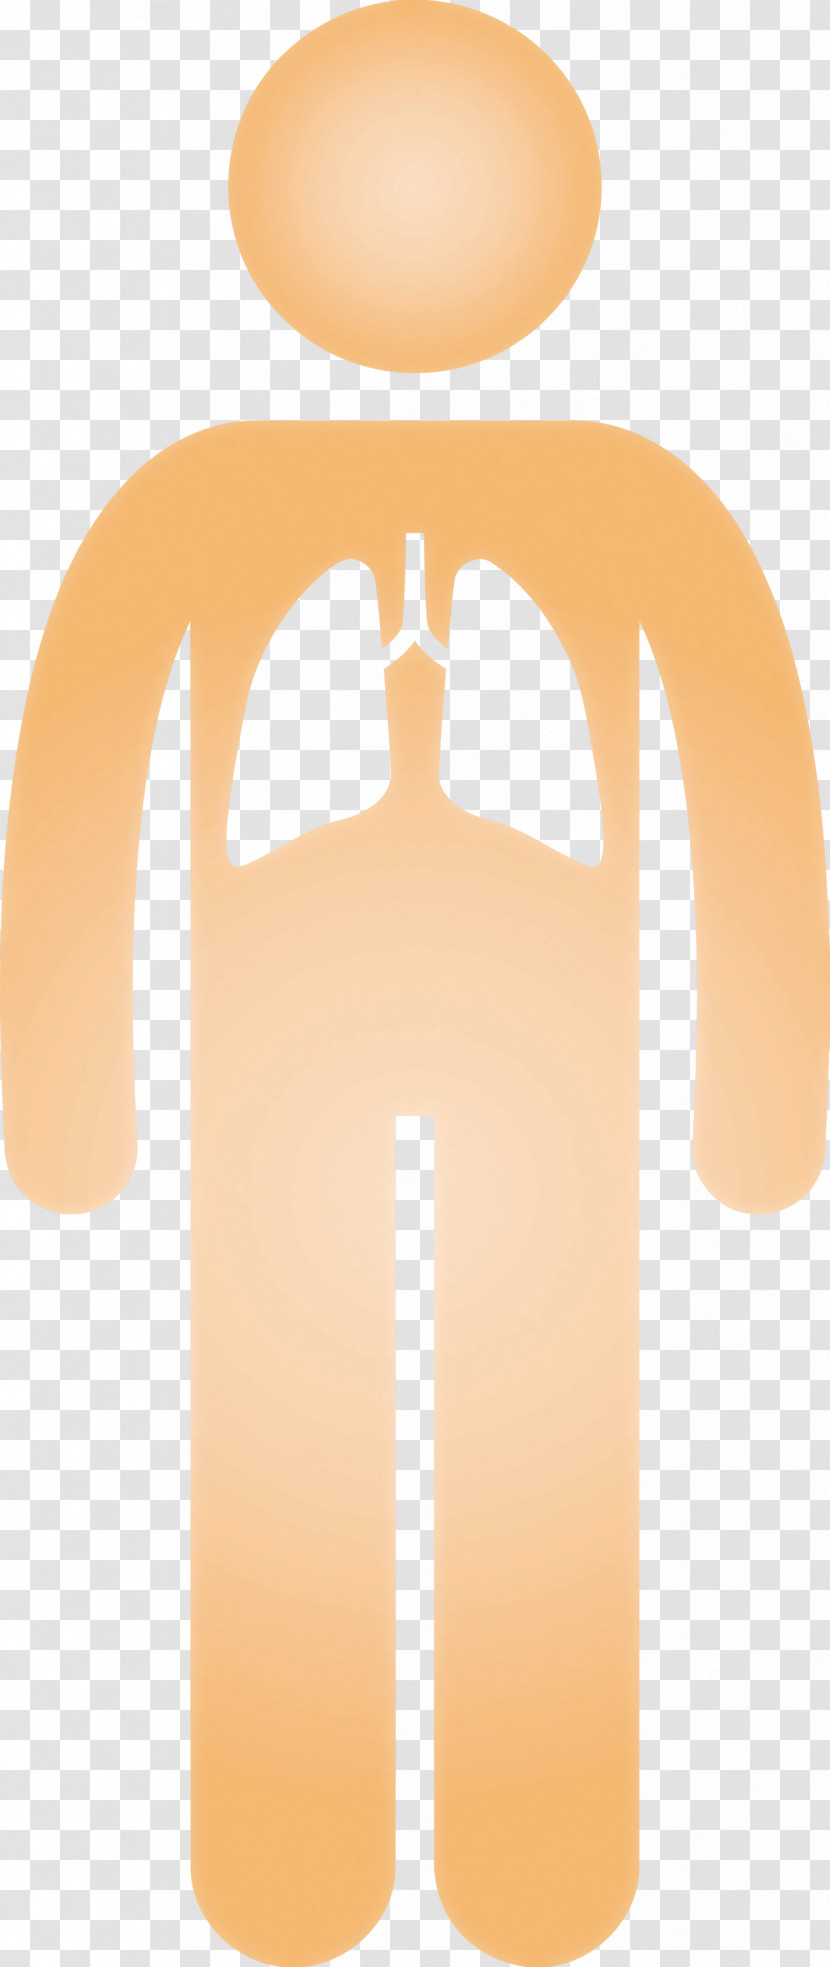 Lungs People Corona Virus Disease Transparent PNG